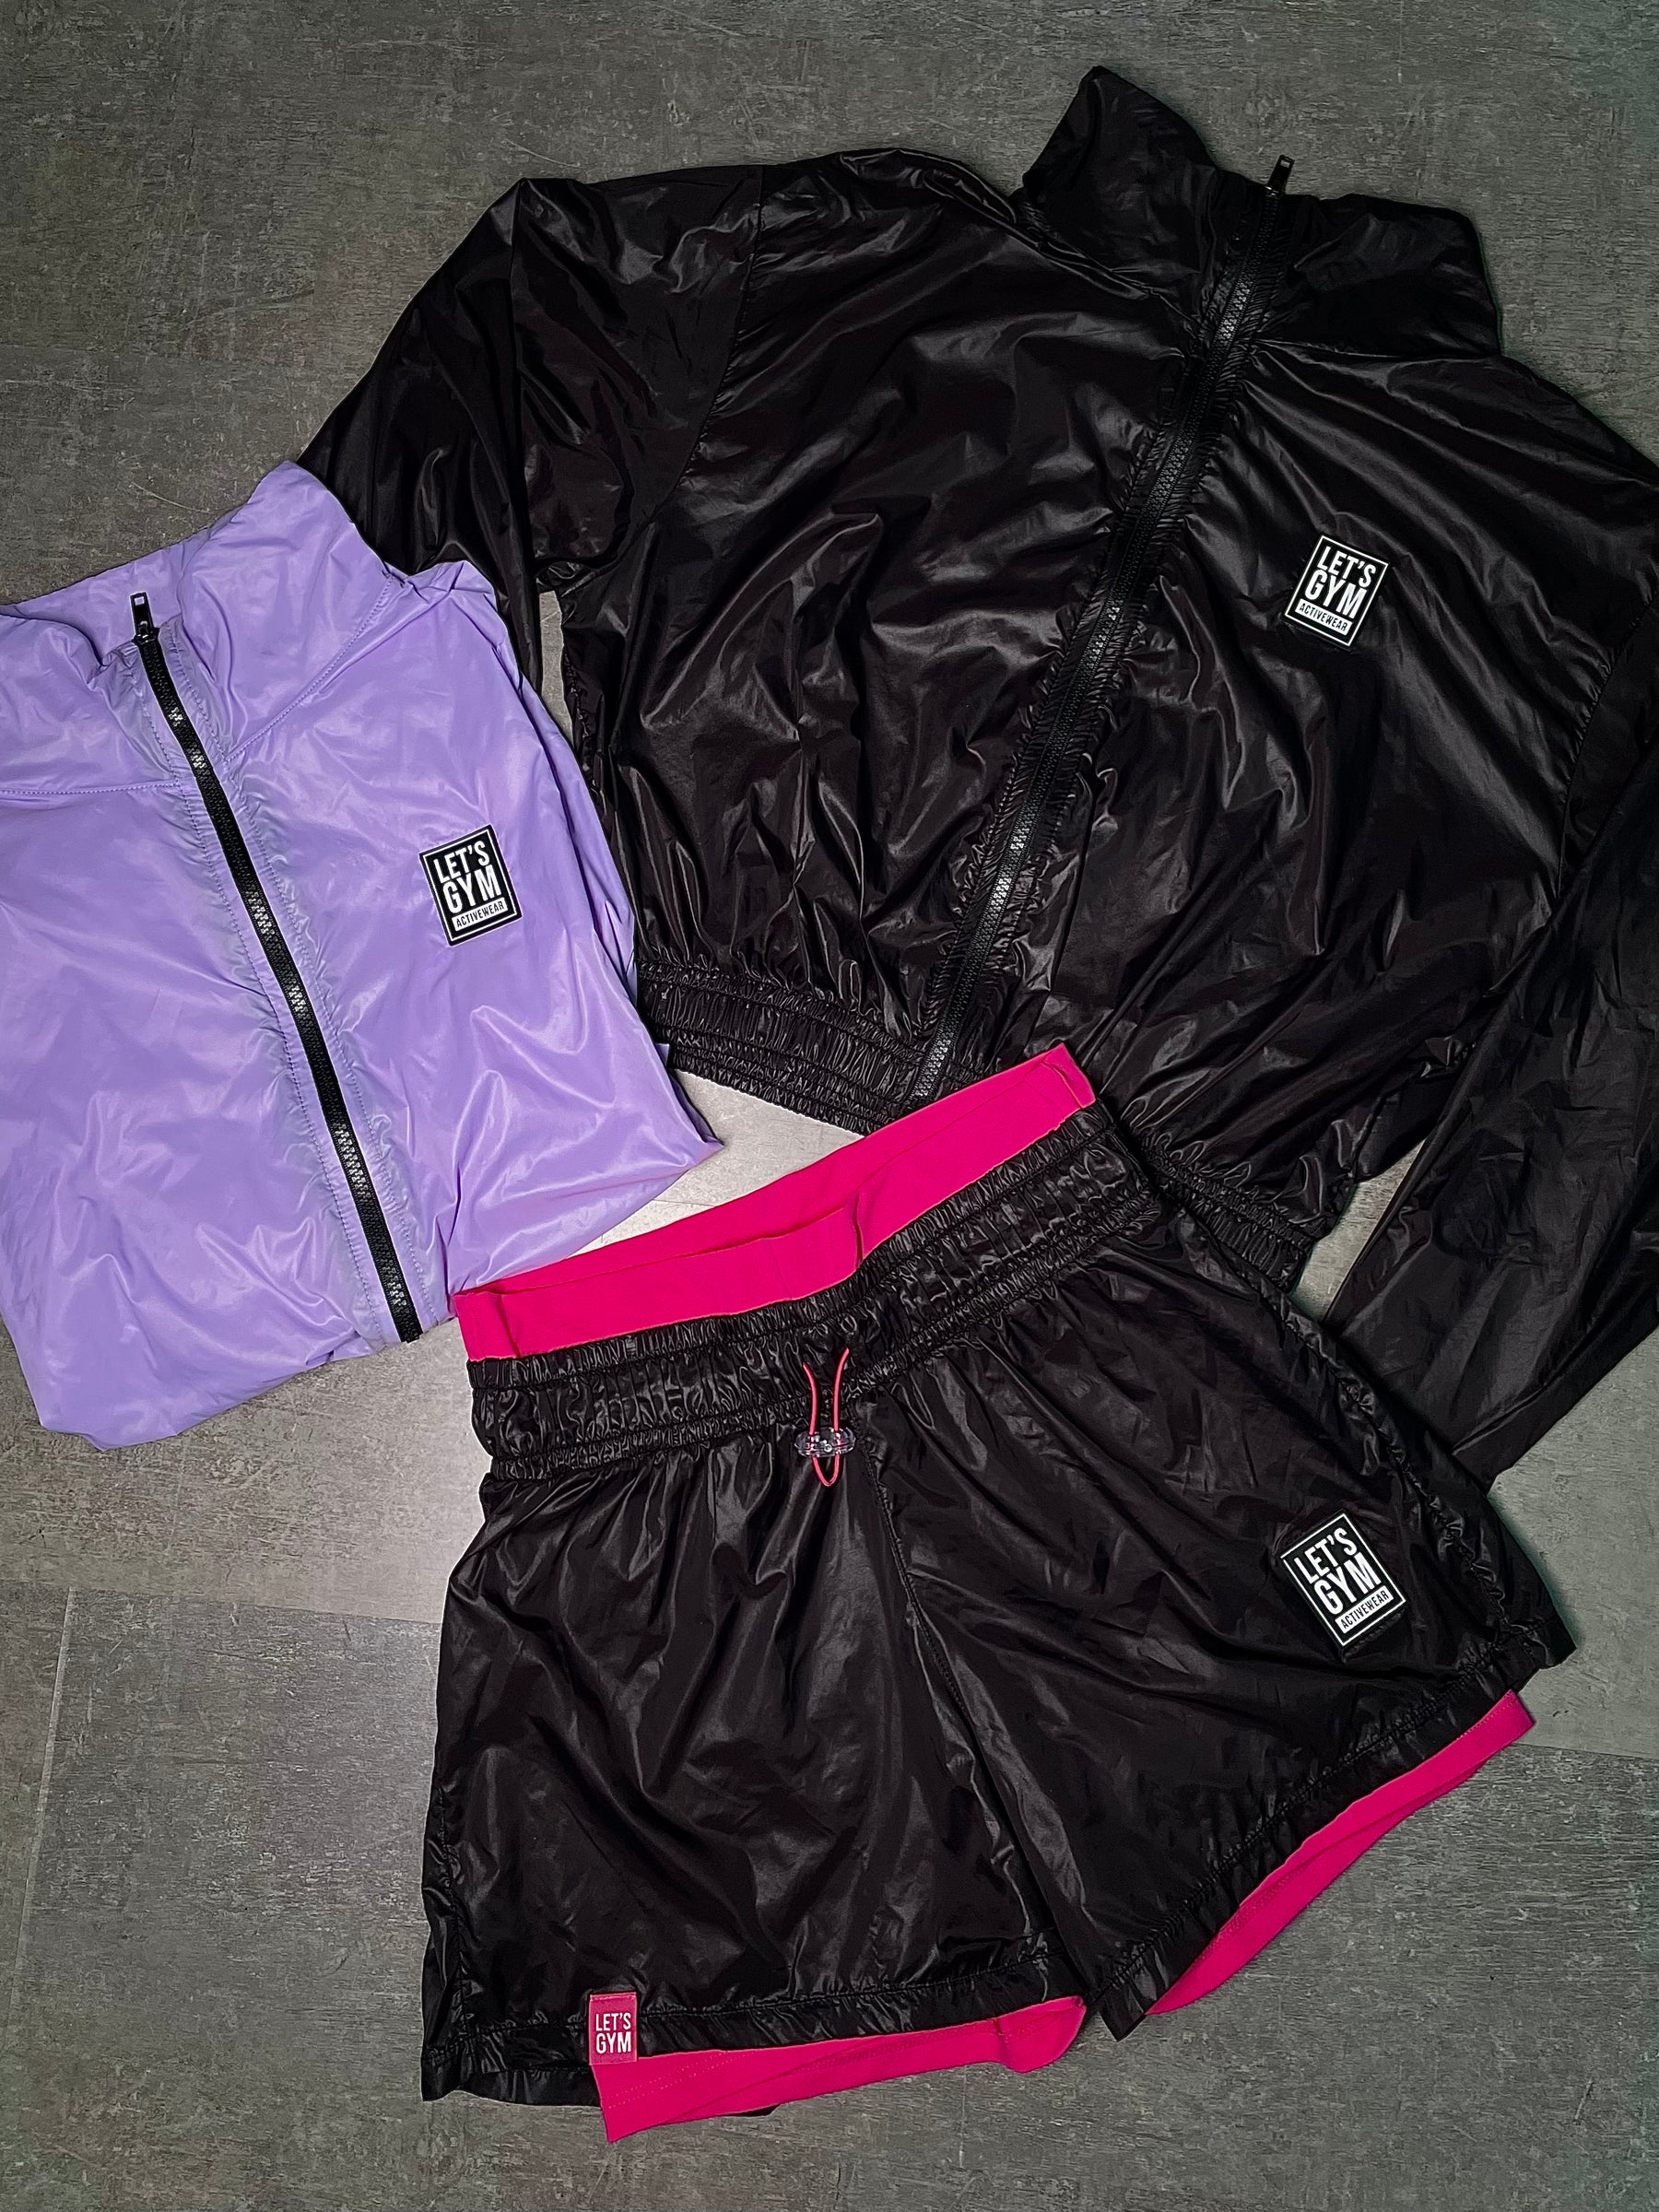 Notion Shorts - Black & Pink